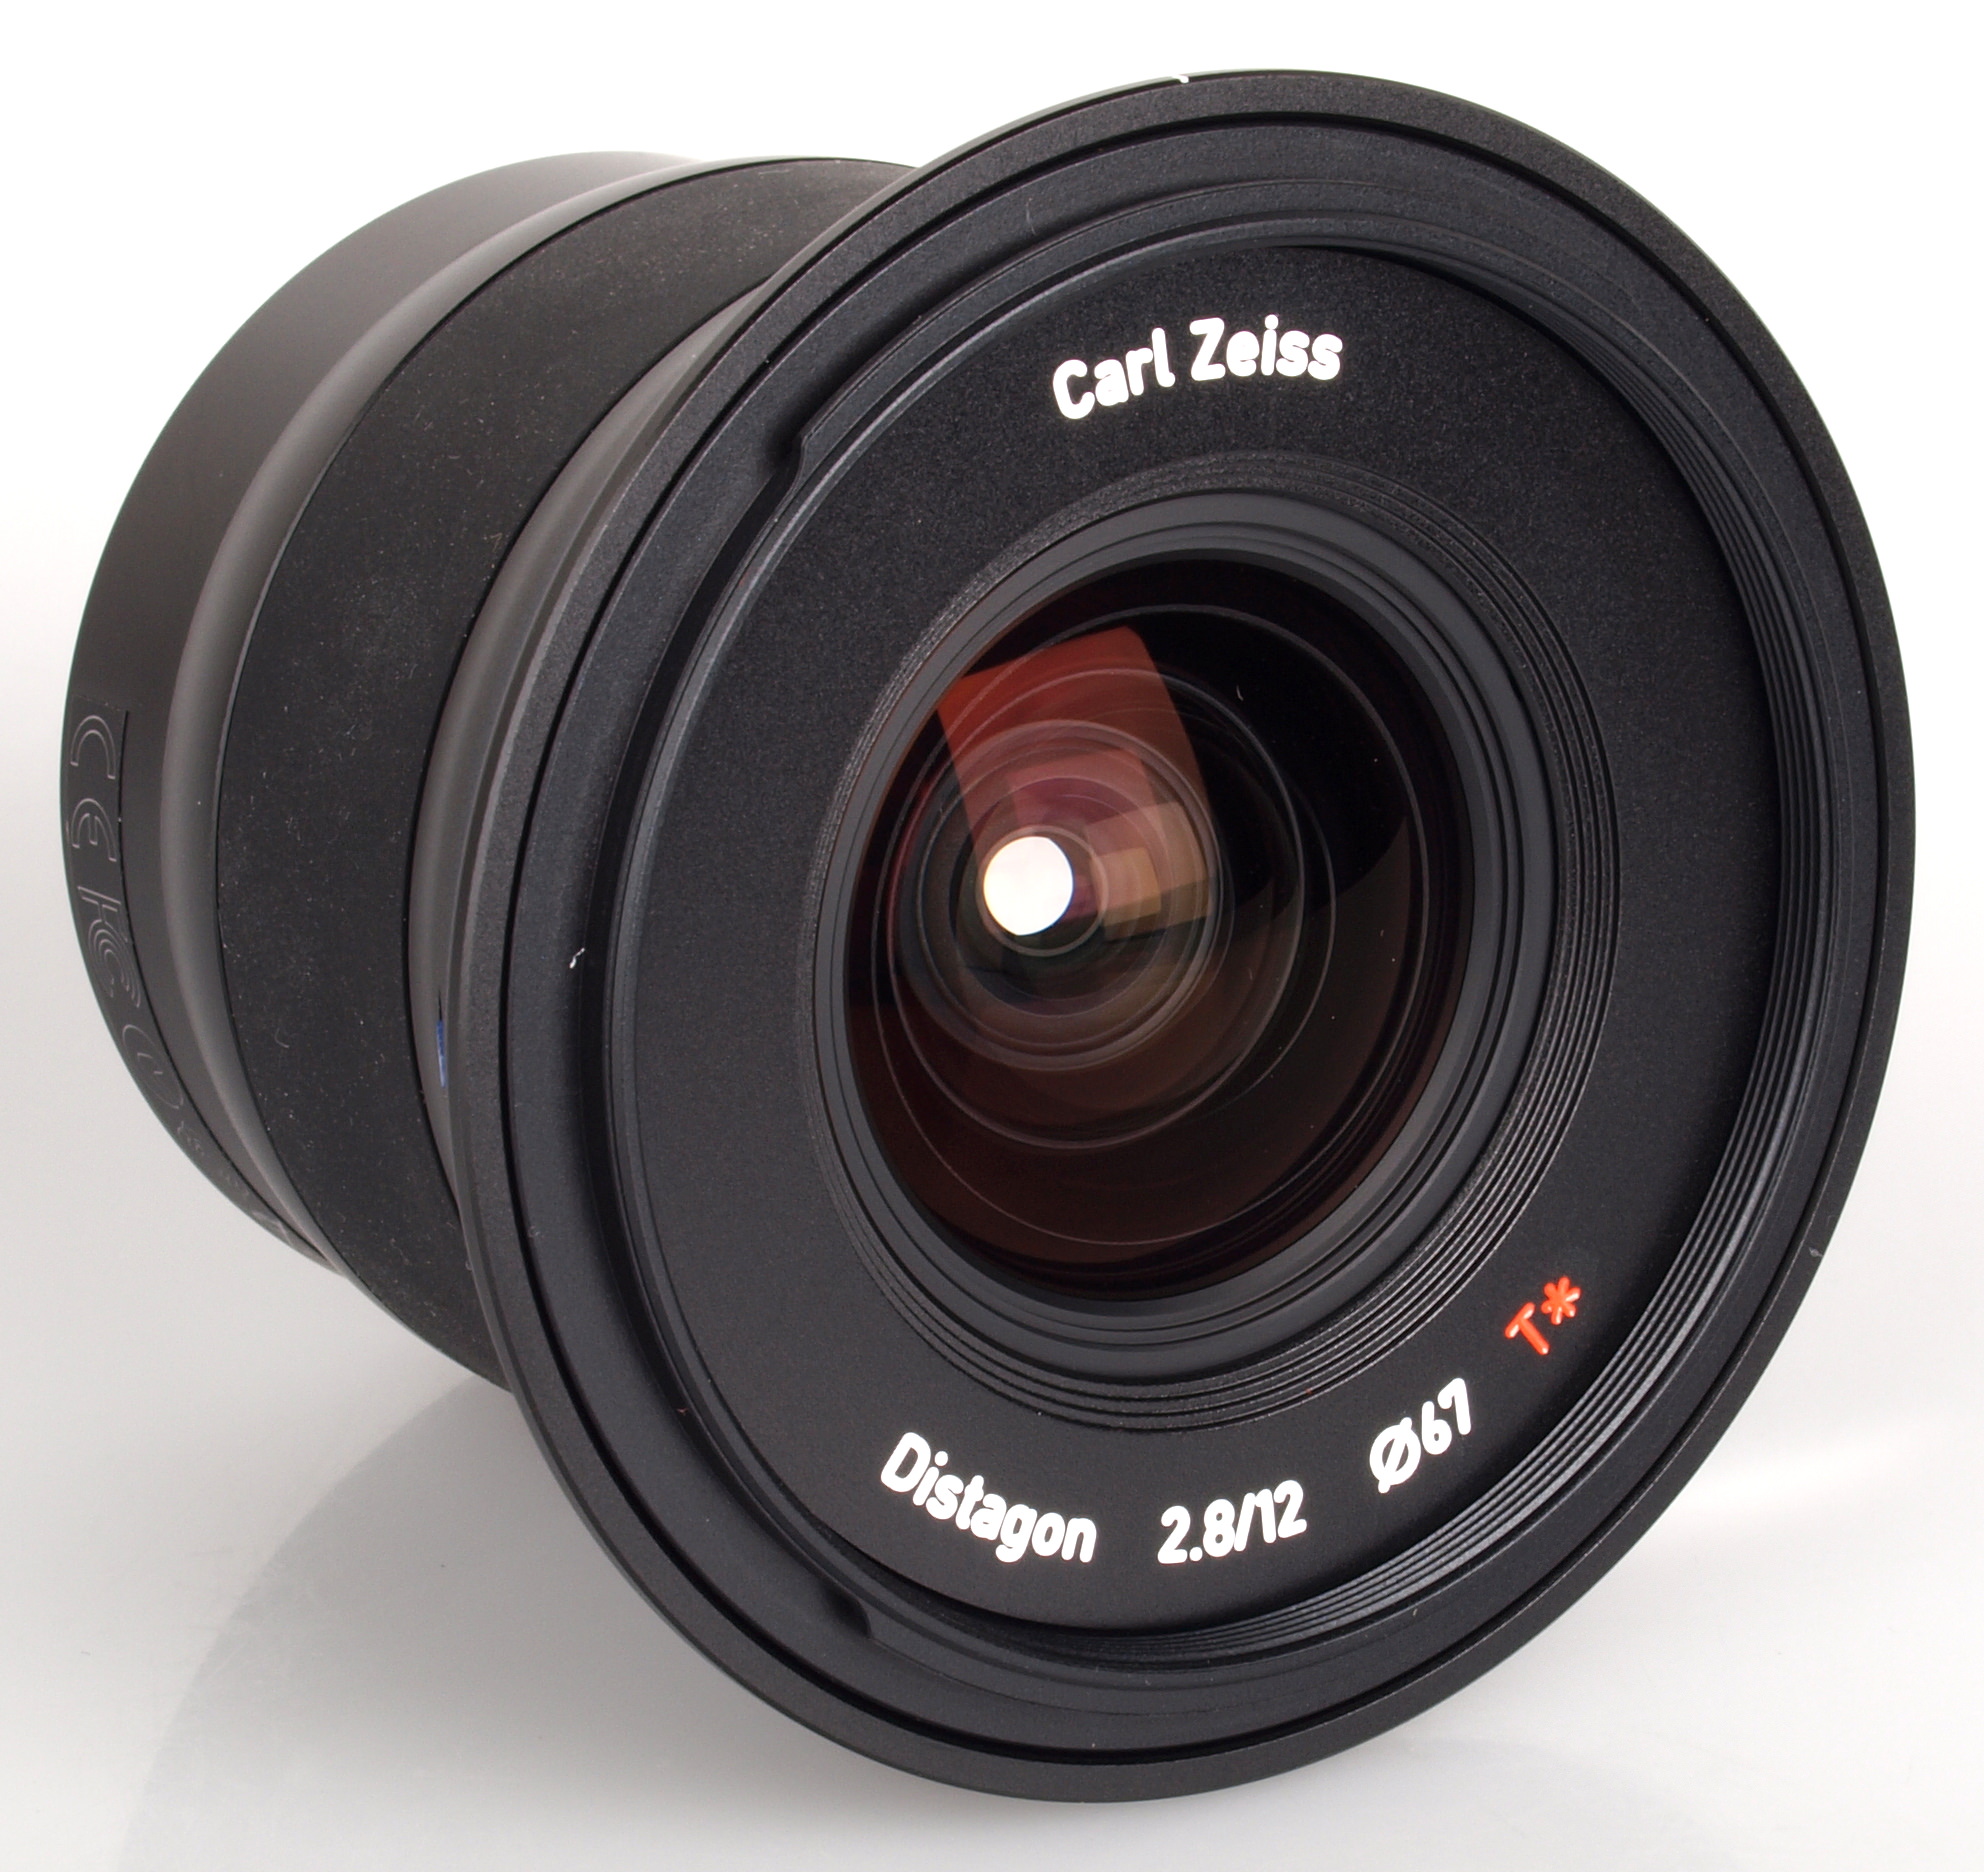 Carl Zeiss Touit Distagon T* 12mm f/2.8 Lens Review